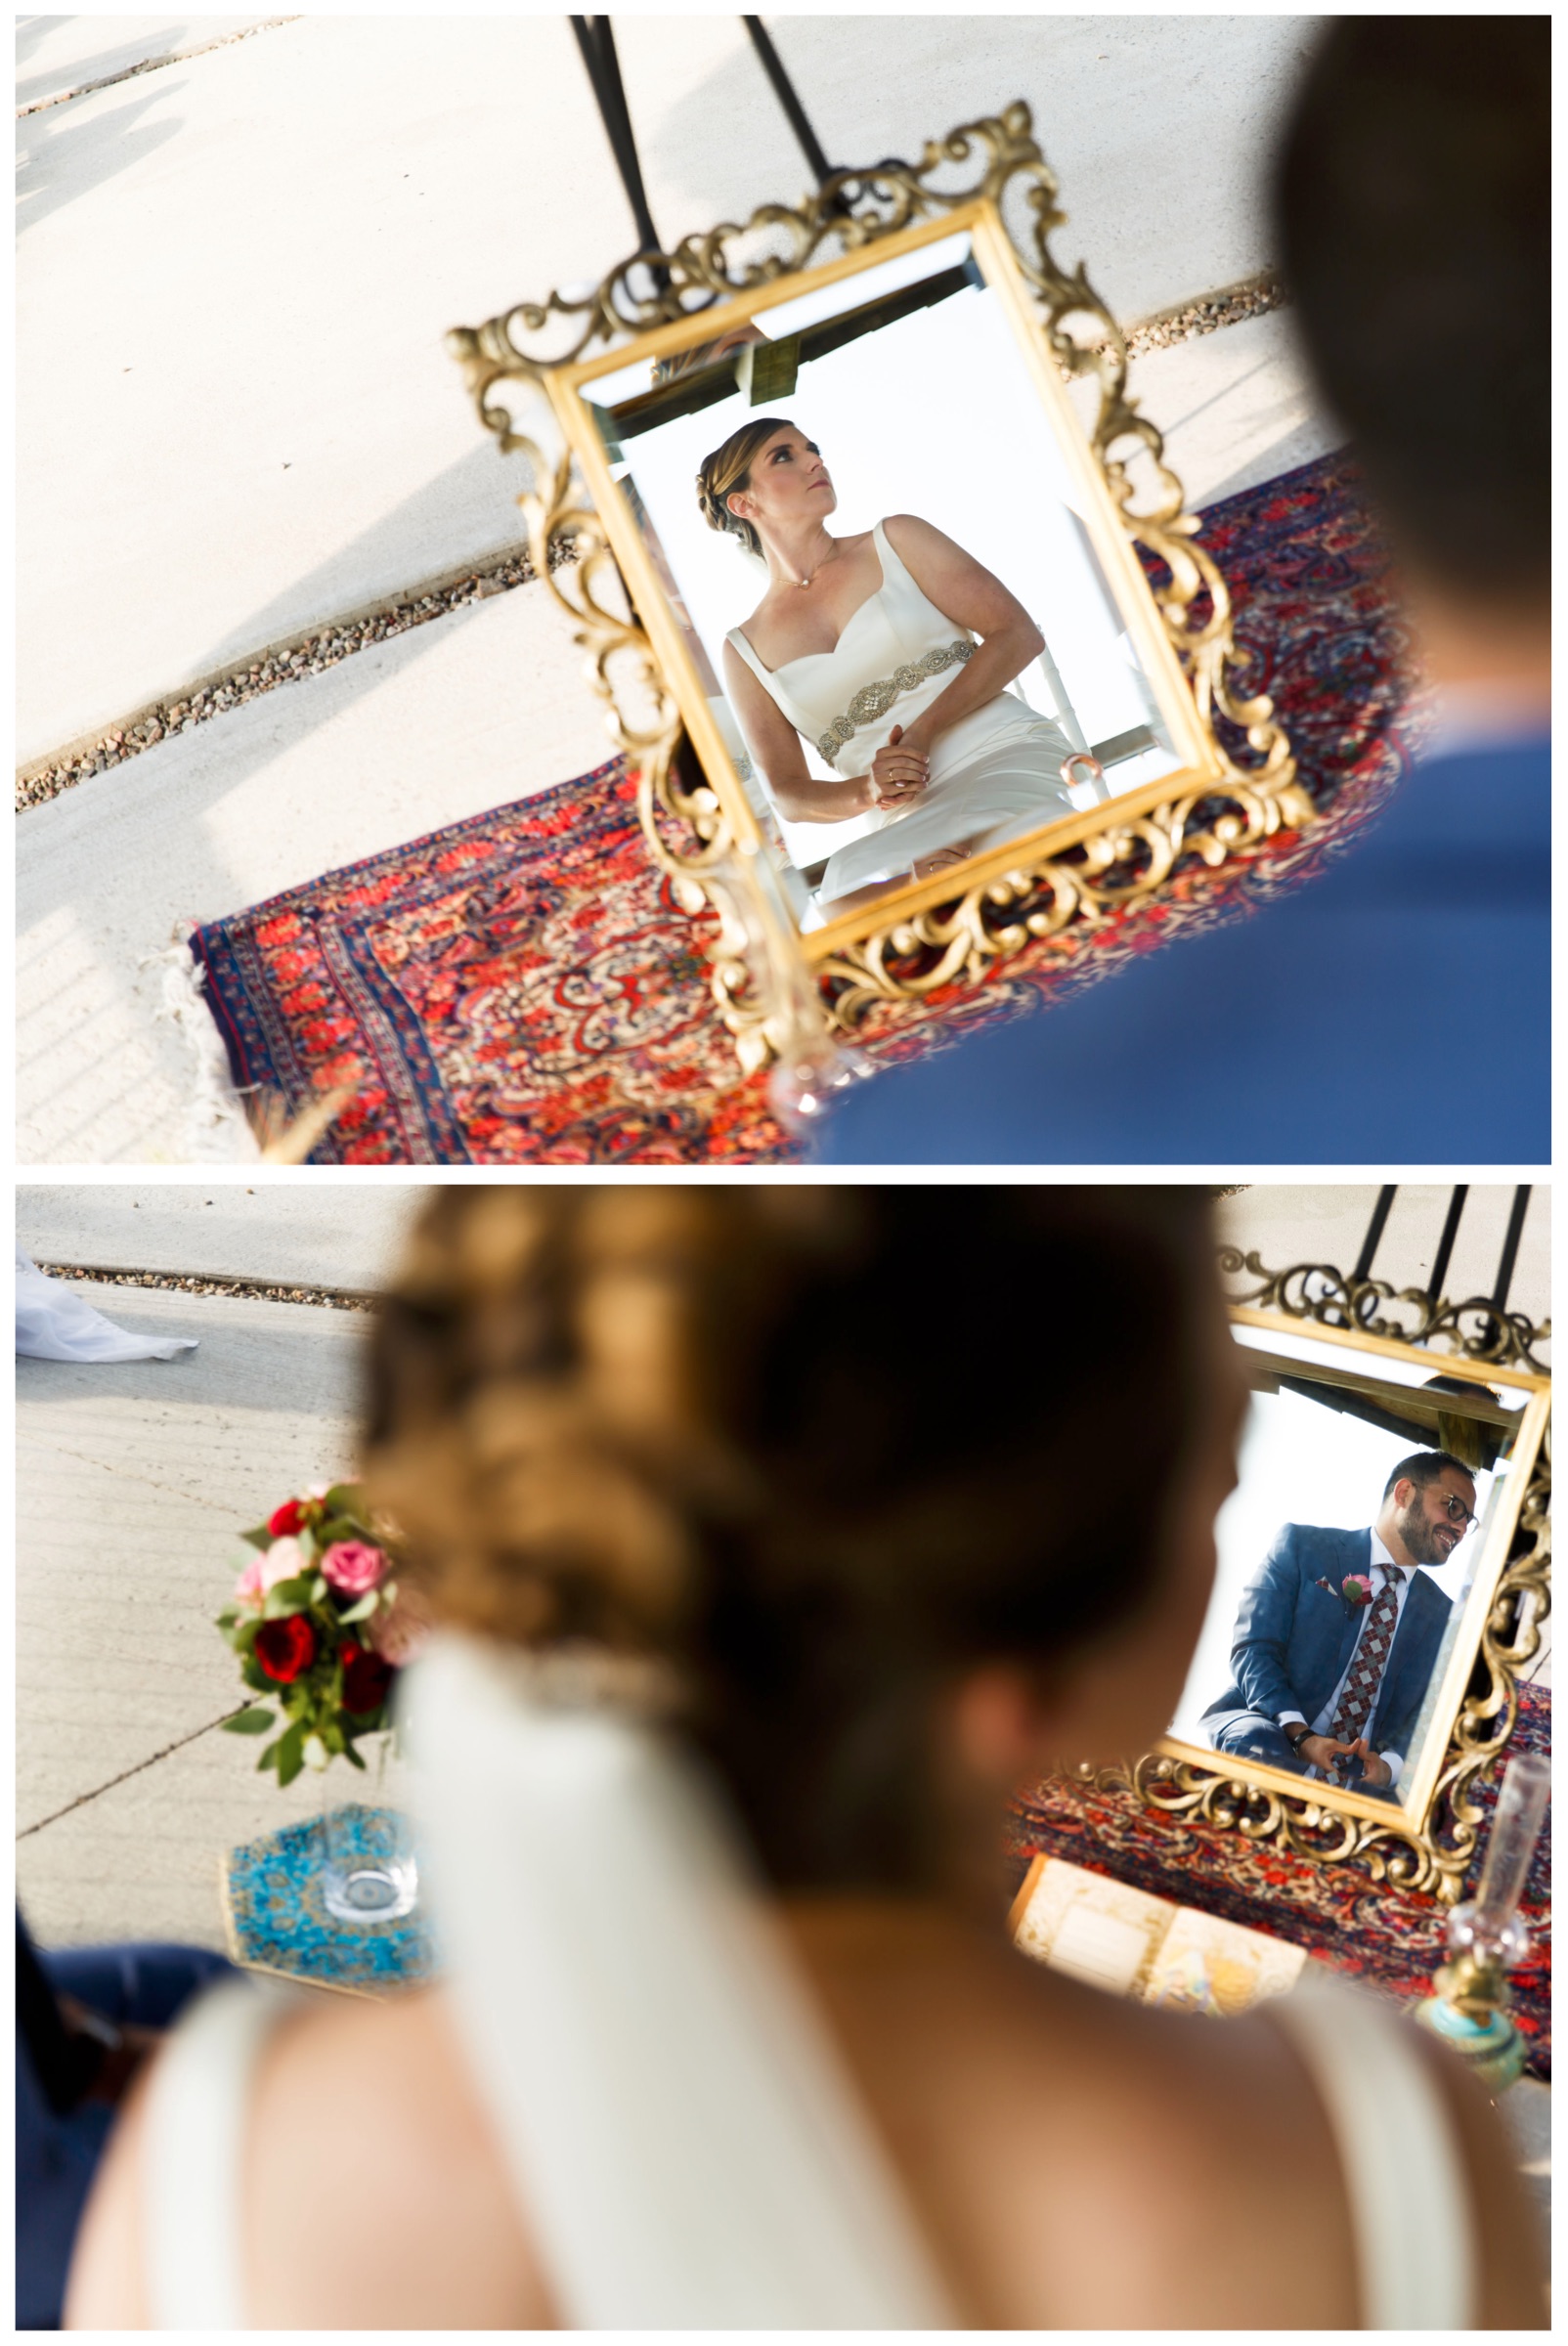 photos of a persian couple's reflection in a mirror